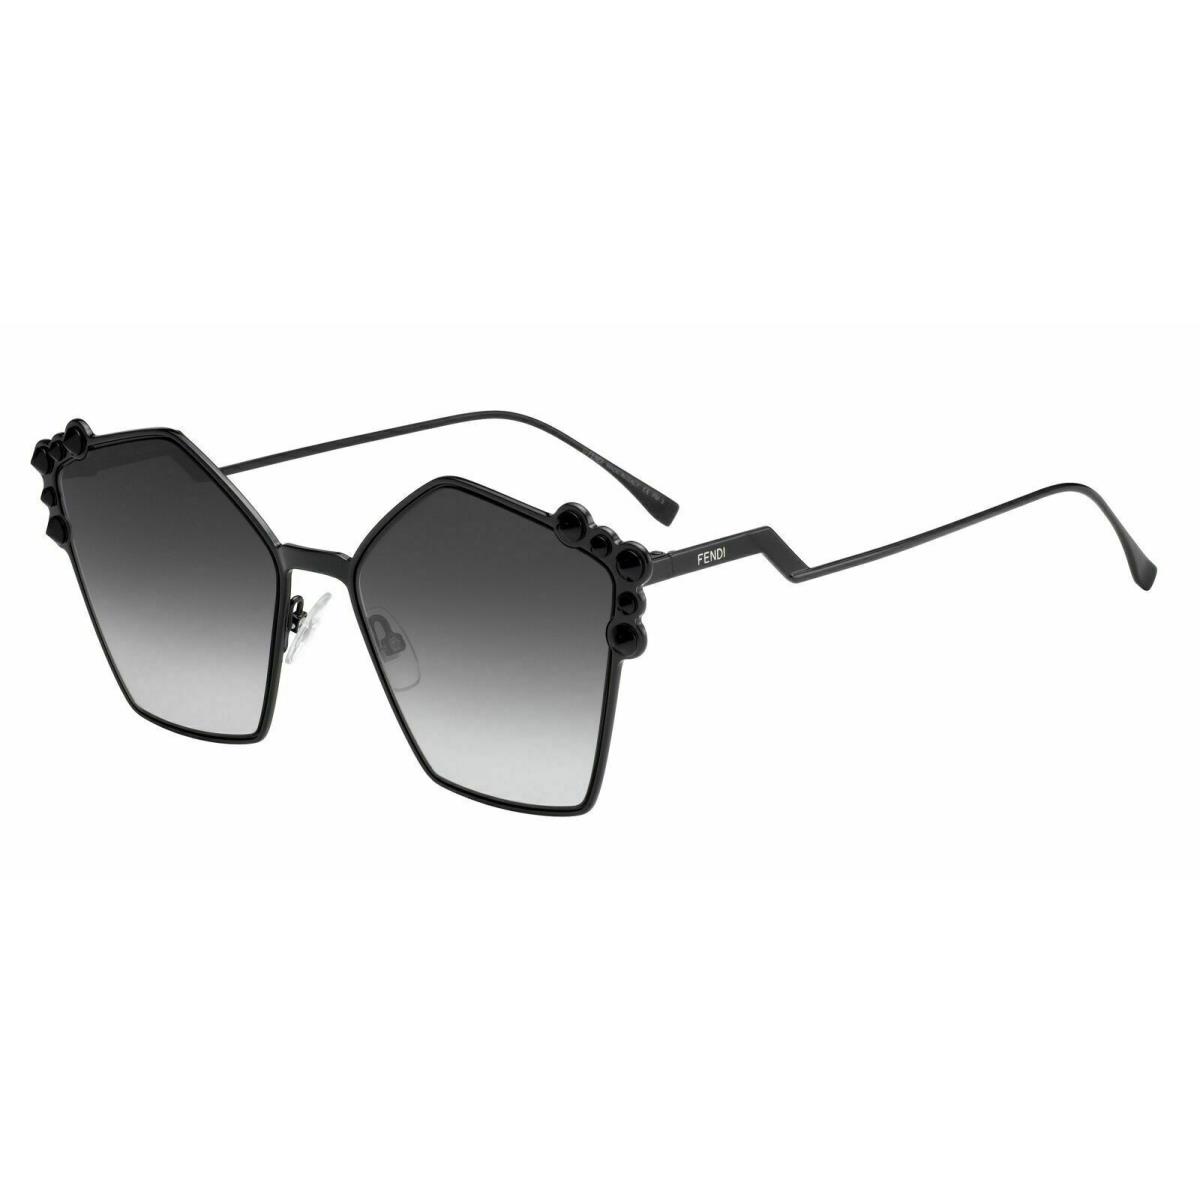 Fendi Can Eye FF 0261 02O5 Fashion Sunglasses Shiny Black / Grey Gradient